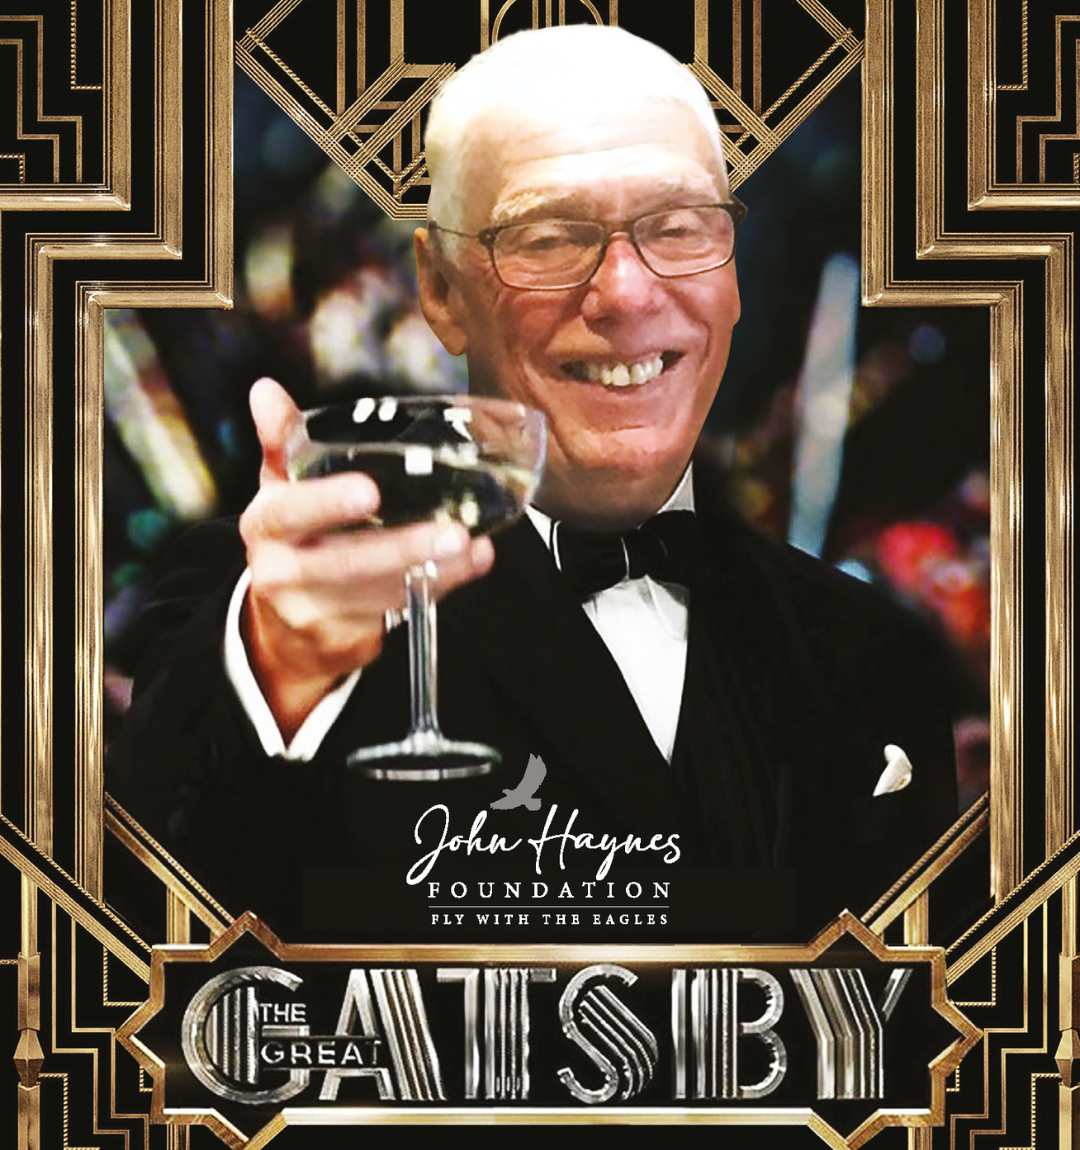 Gala-dinner-great-gatsby-flyer